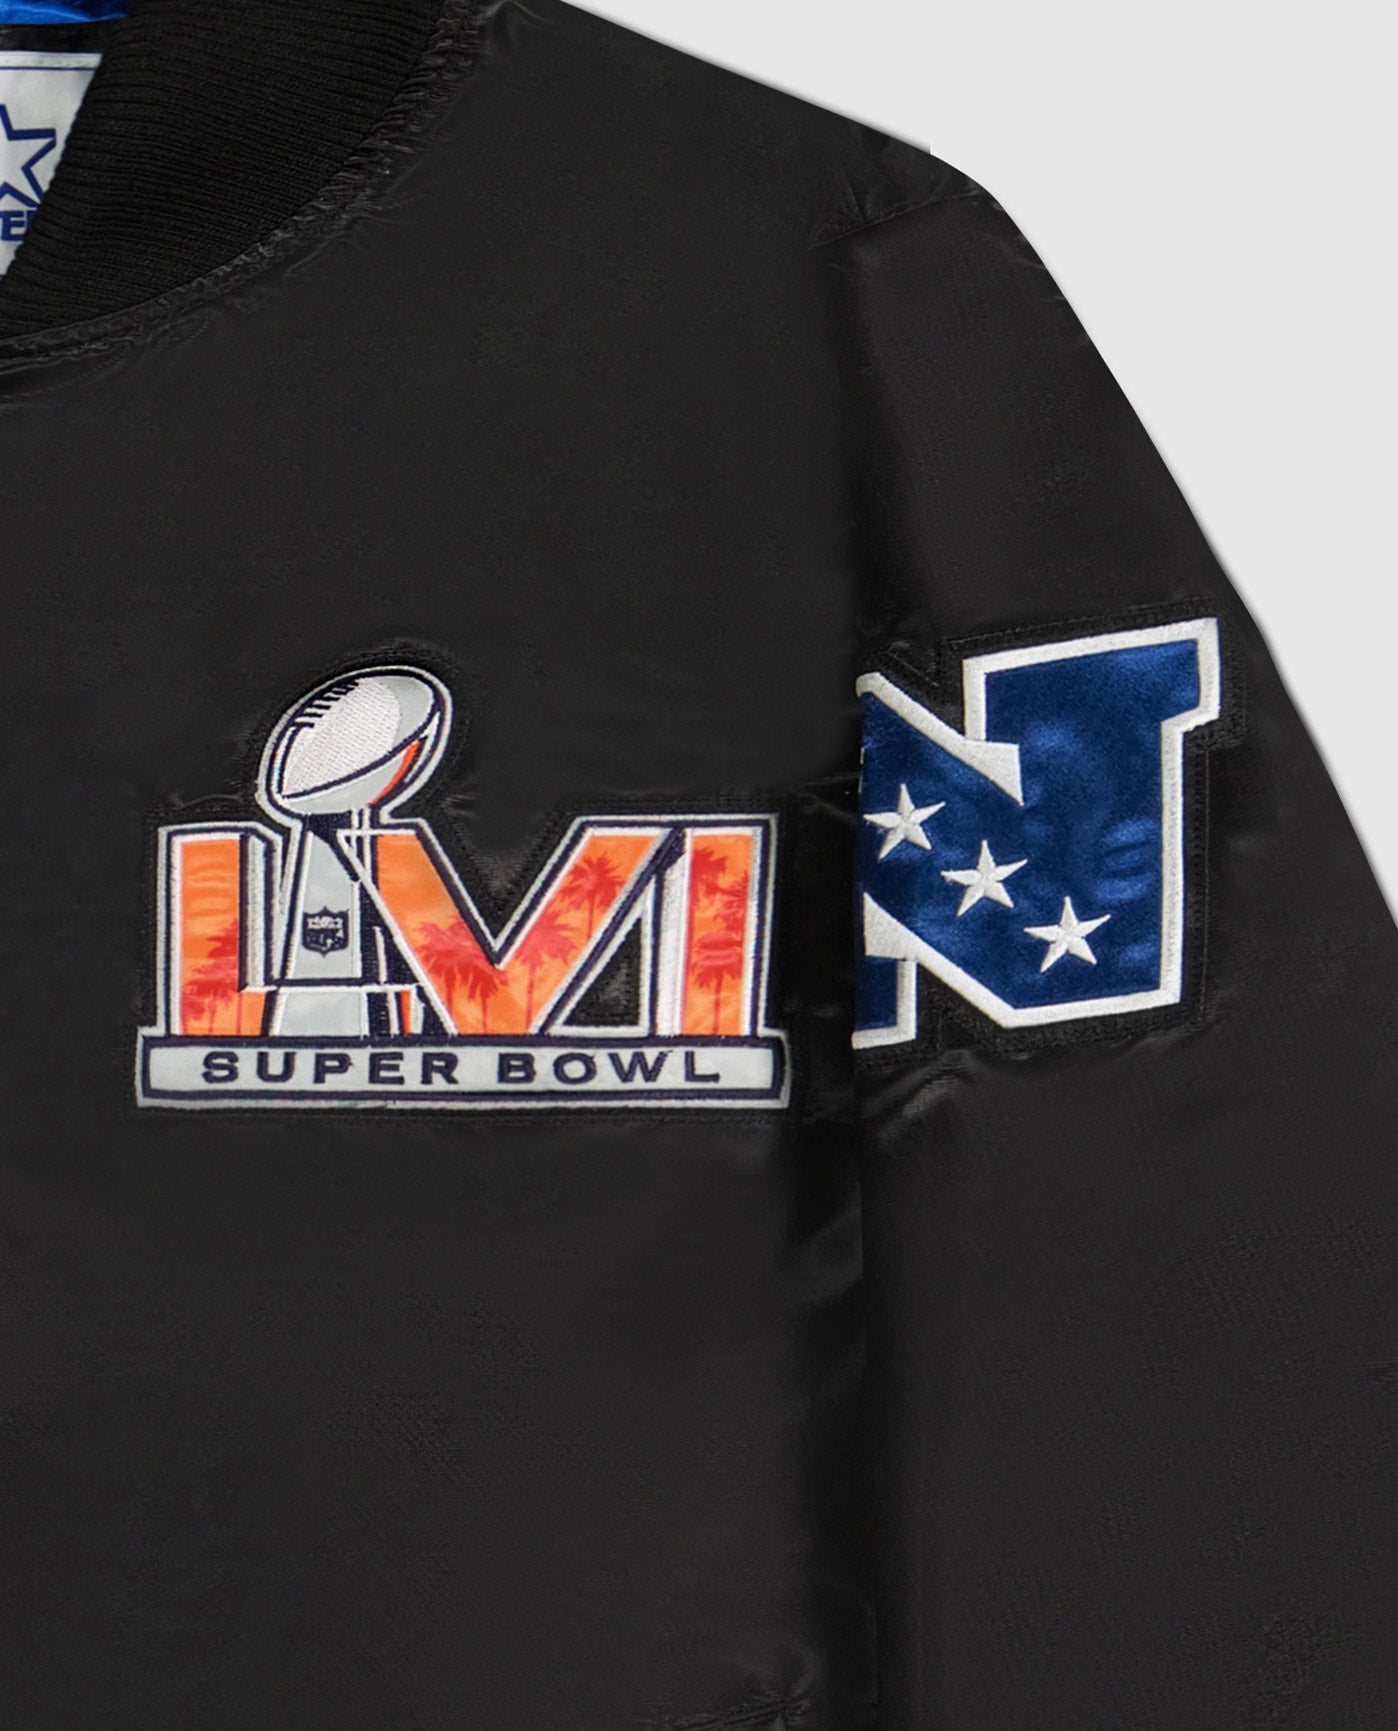 LVI Super Bowl Logo top left chest | Black